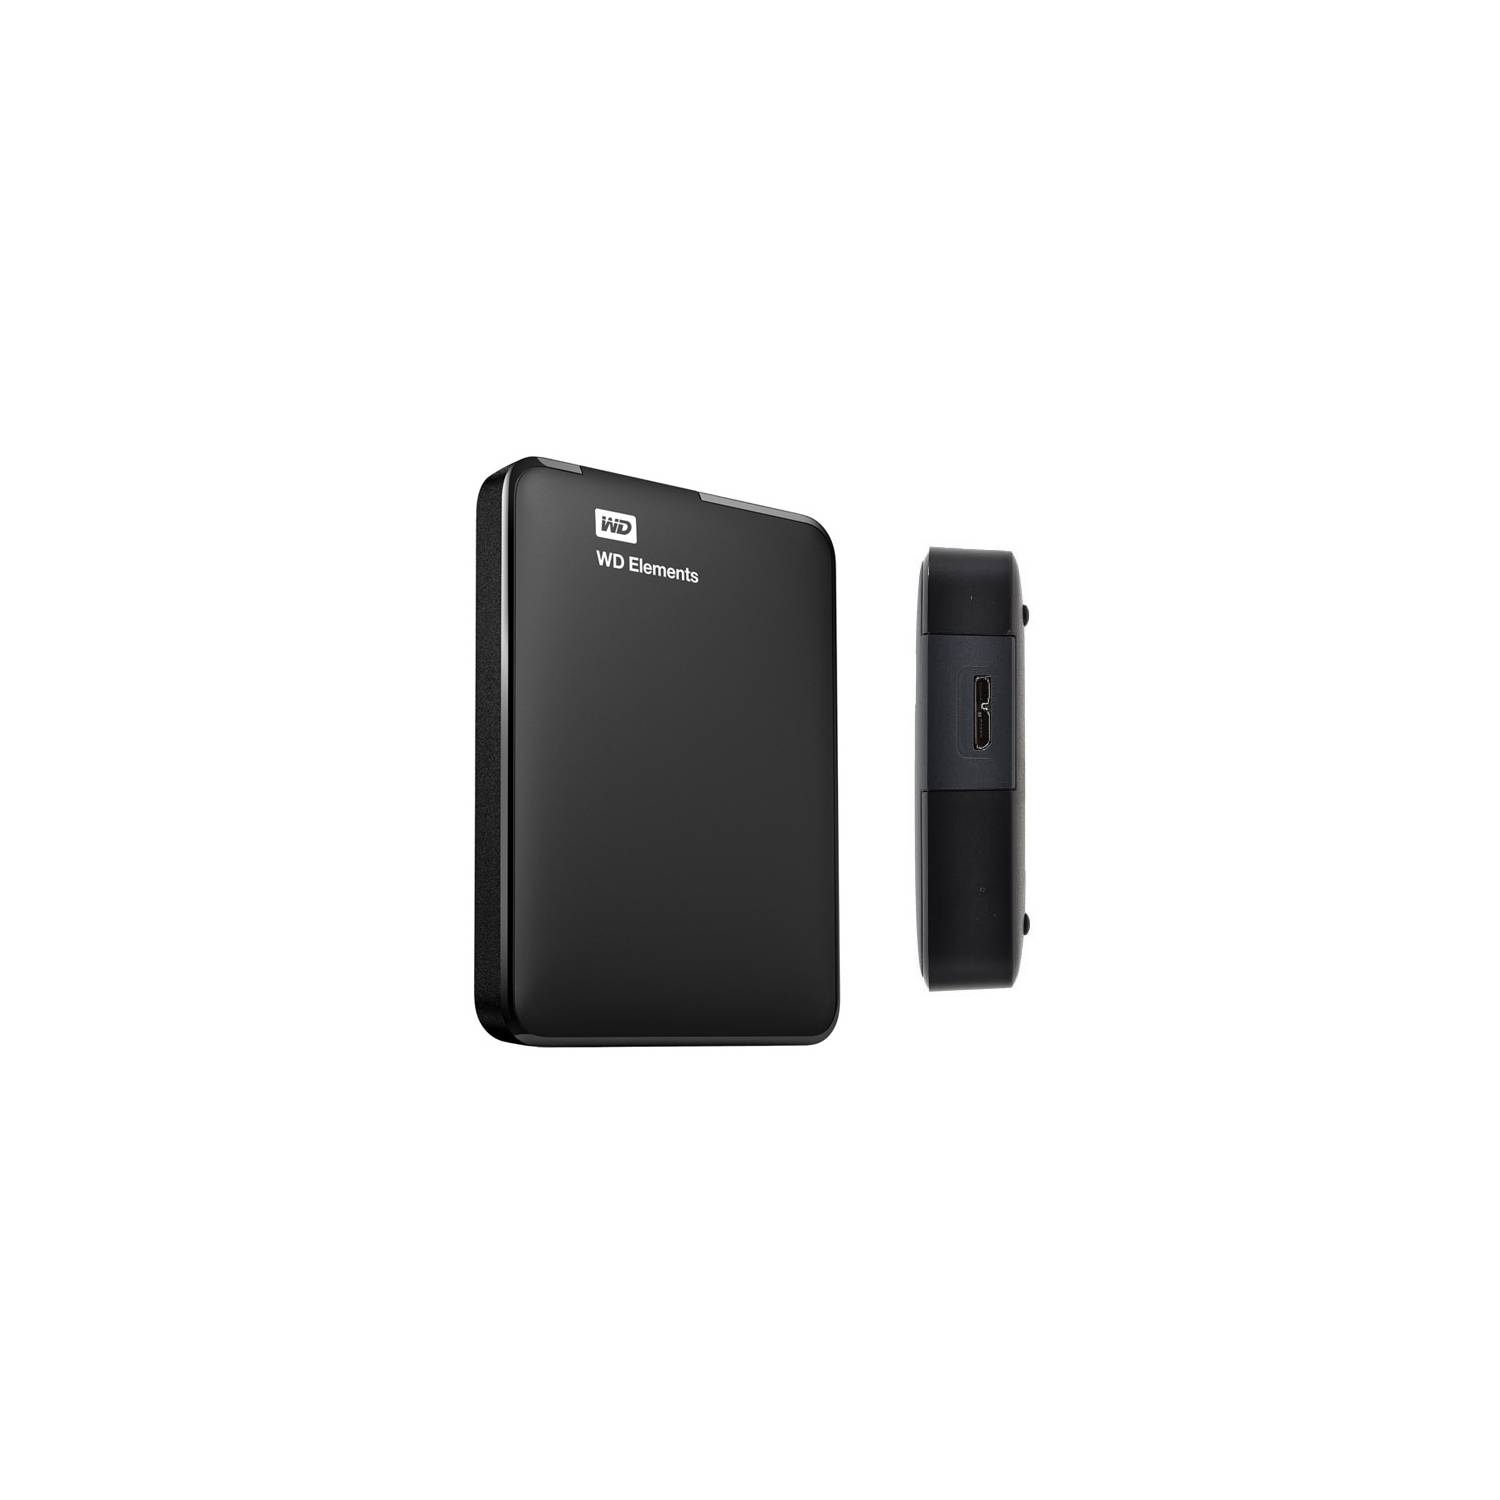 Disco duro externo Western Digital Elements Portable, 2 TB, USB 3.0, negro.